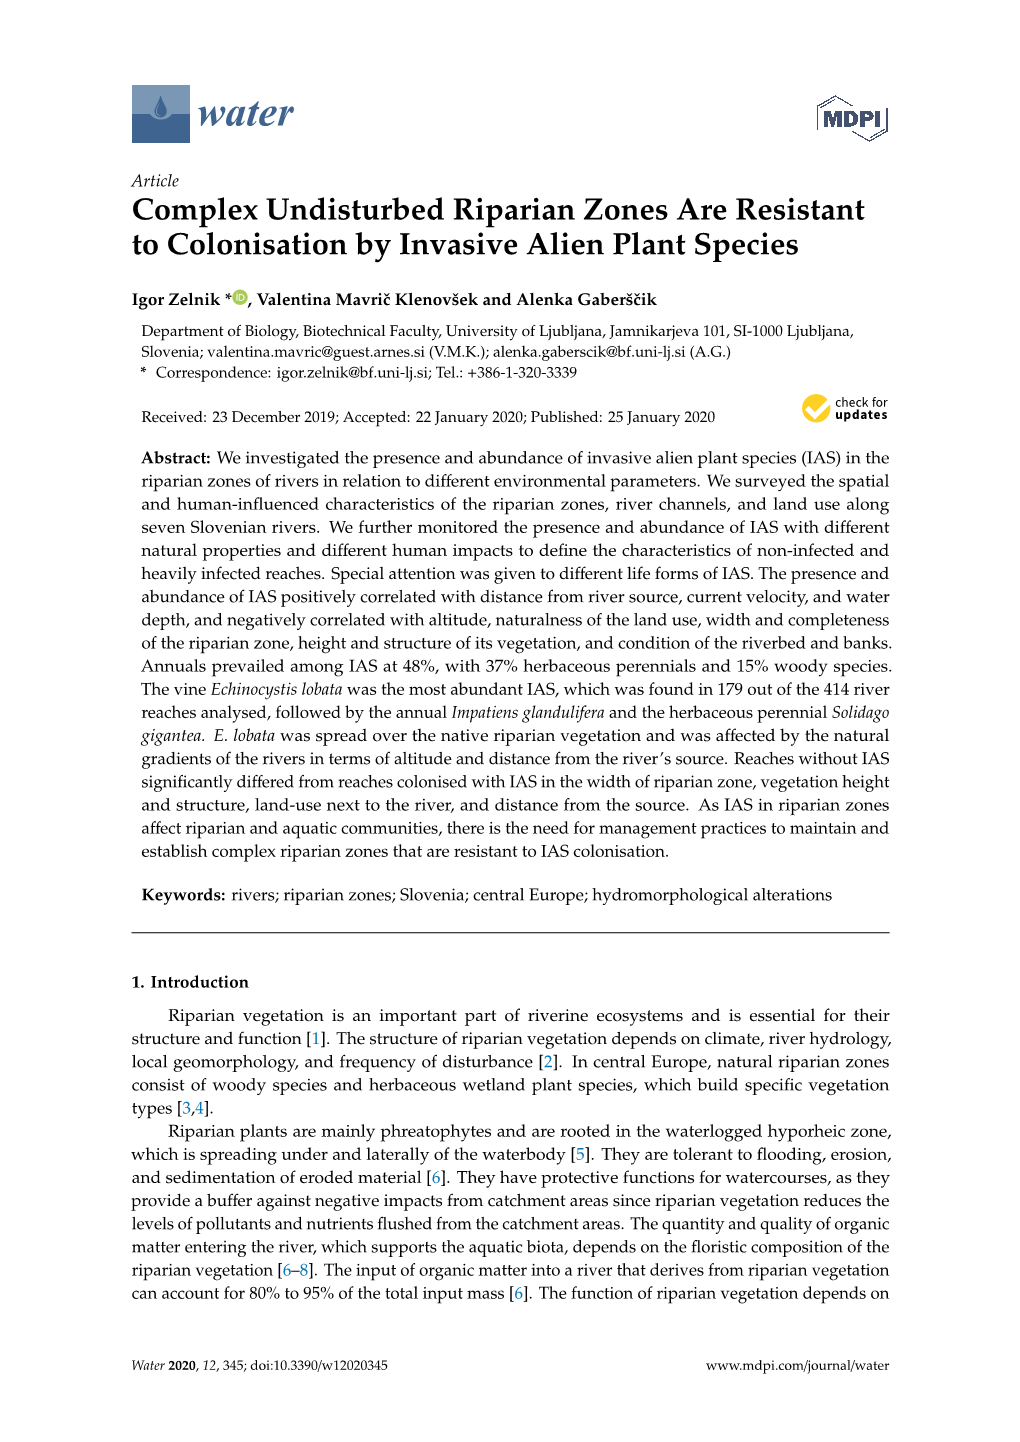 Complex Undisturbed Riparian Zones Are Resistant to Colonisation by Invasive Alien Plant Species